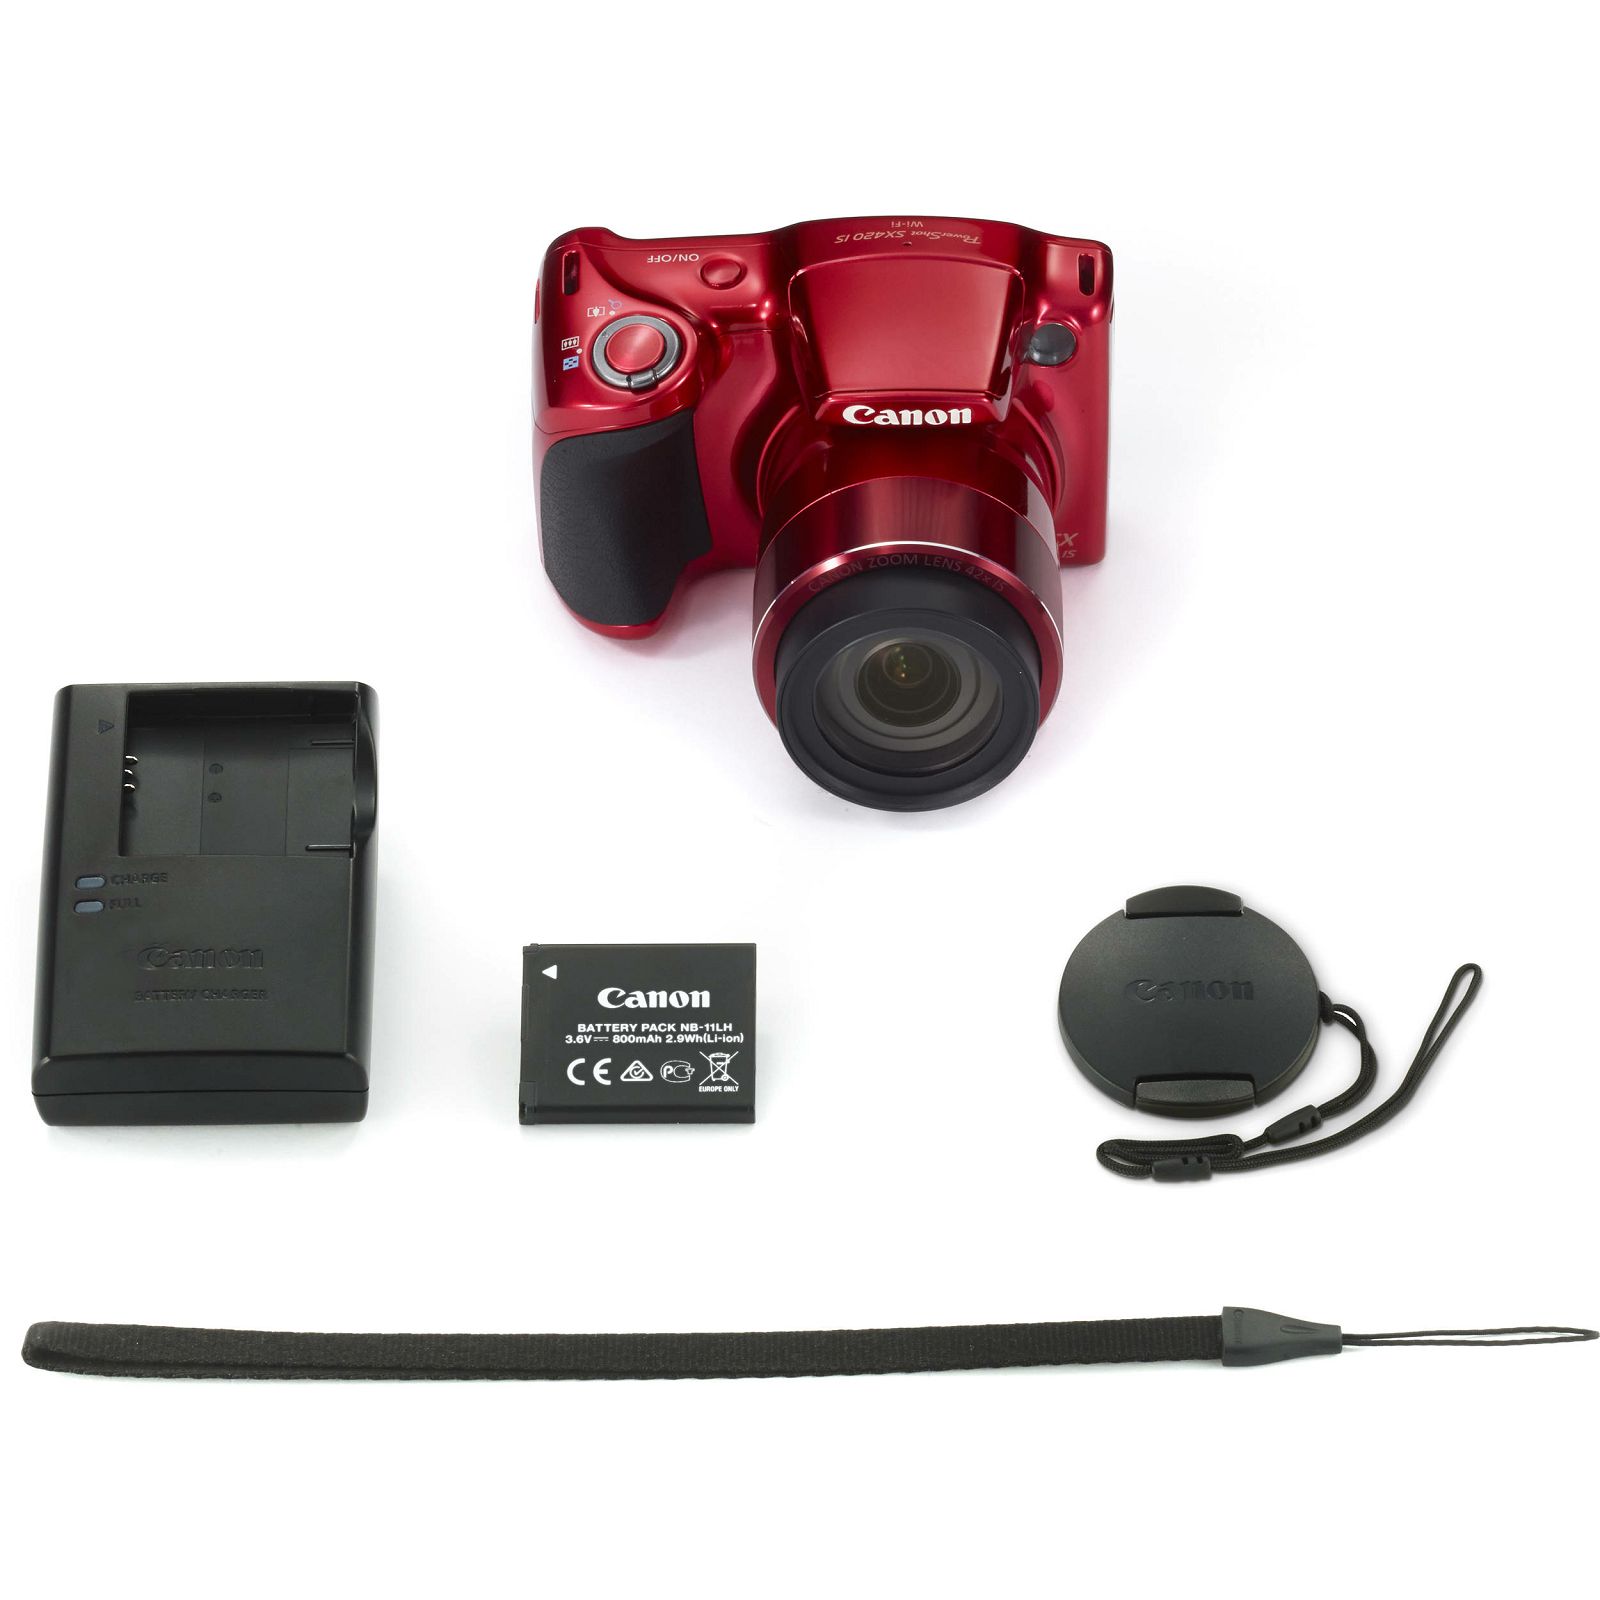 Canon Powershot SX420IS Red EU23 1069C002AA SX420 IS crveni digitalni fotoaparat